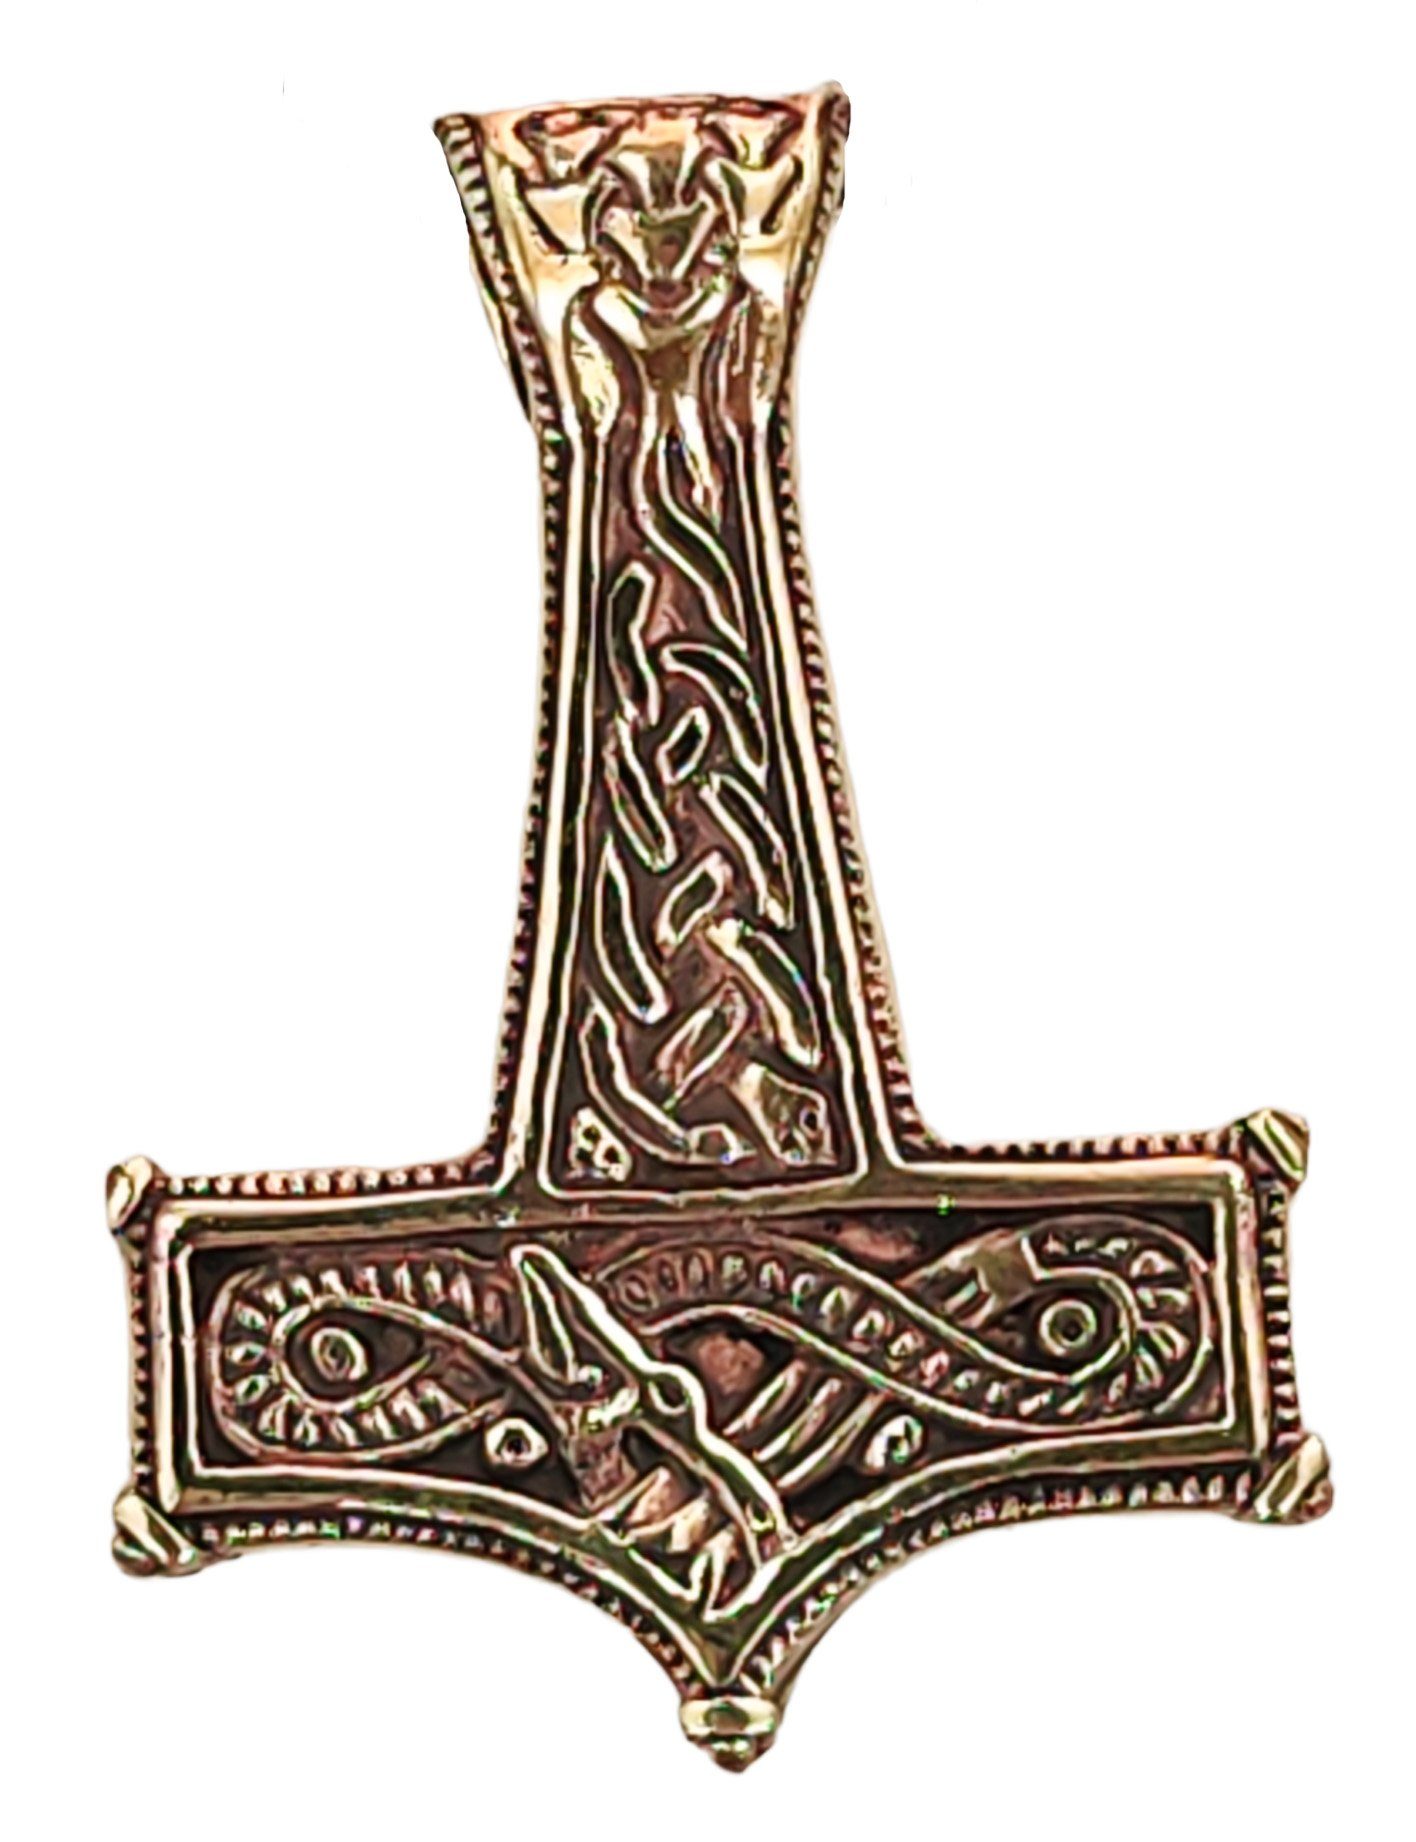 Thorshammer Kettenanhänger Thorhammer of Bronze Leather Midgardschlange Kiss Midgard